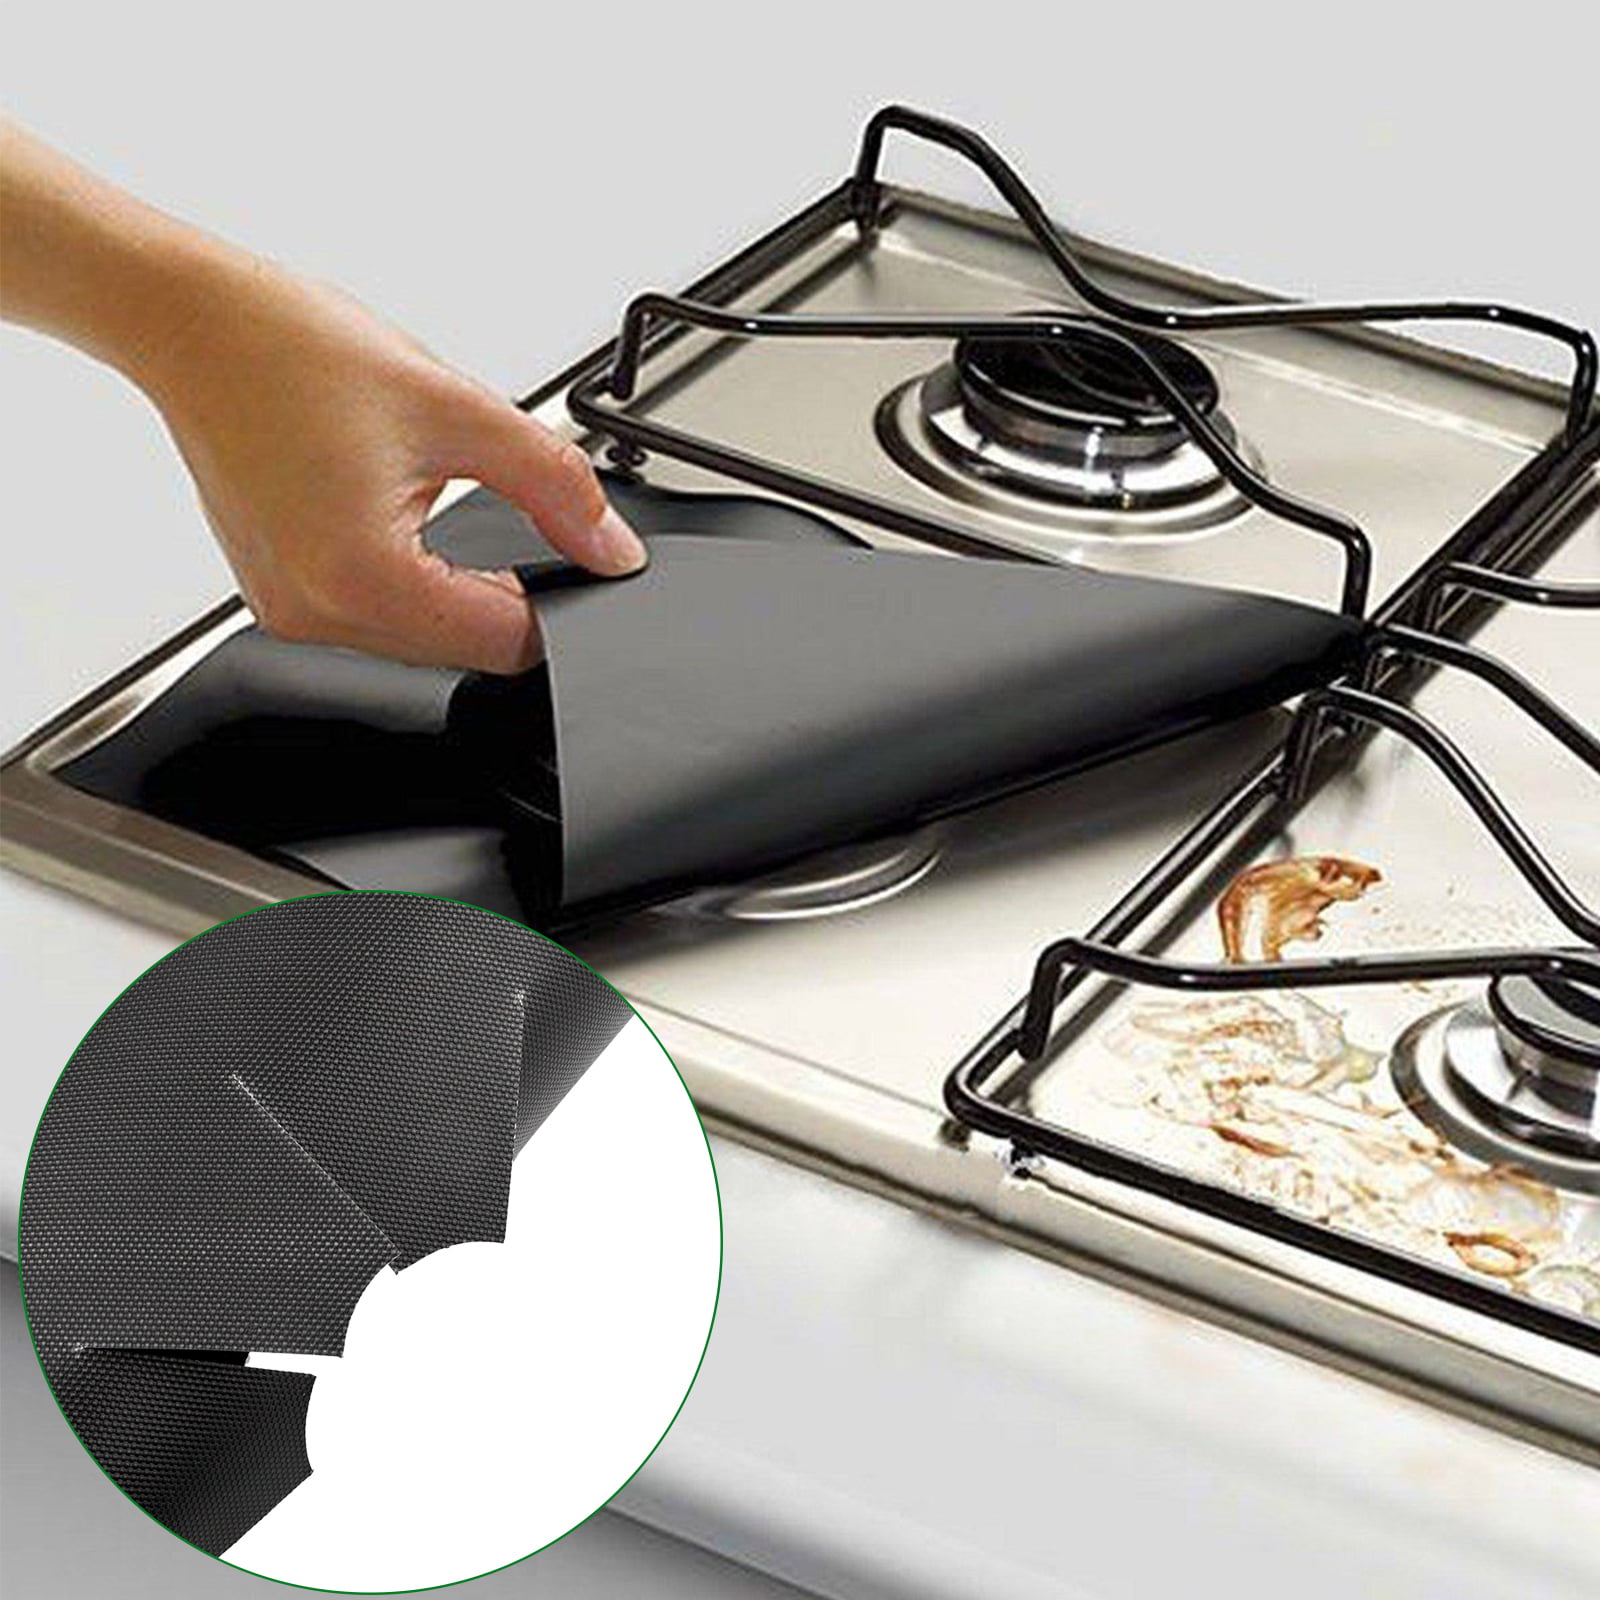 Allaind 4 Pcs Gas Hob Range Protectors Reusable Gas Stove Burner Covers Non Stick Clean Mat Pad for Kitchen 